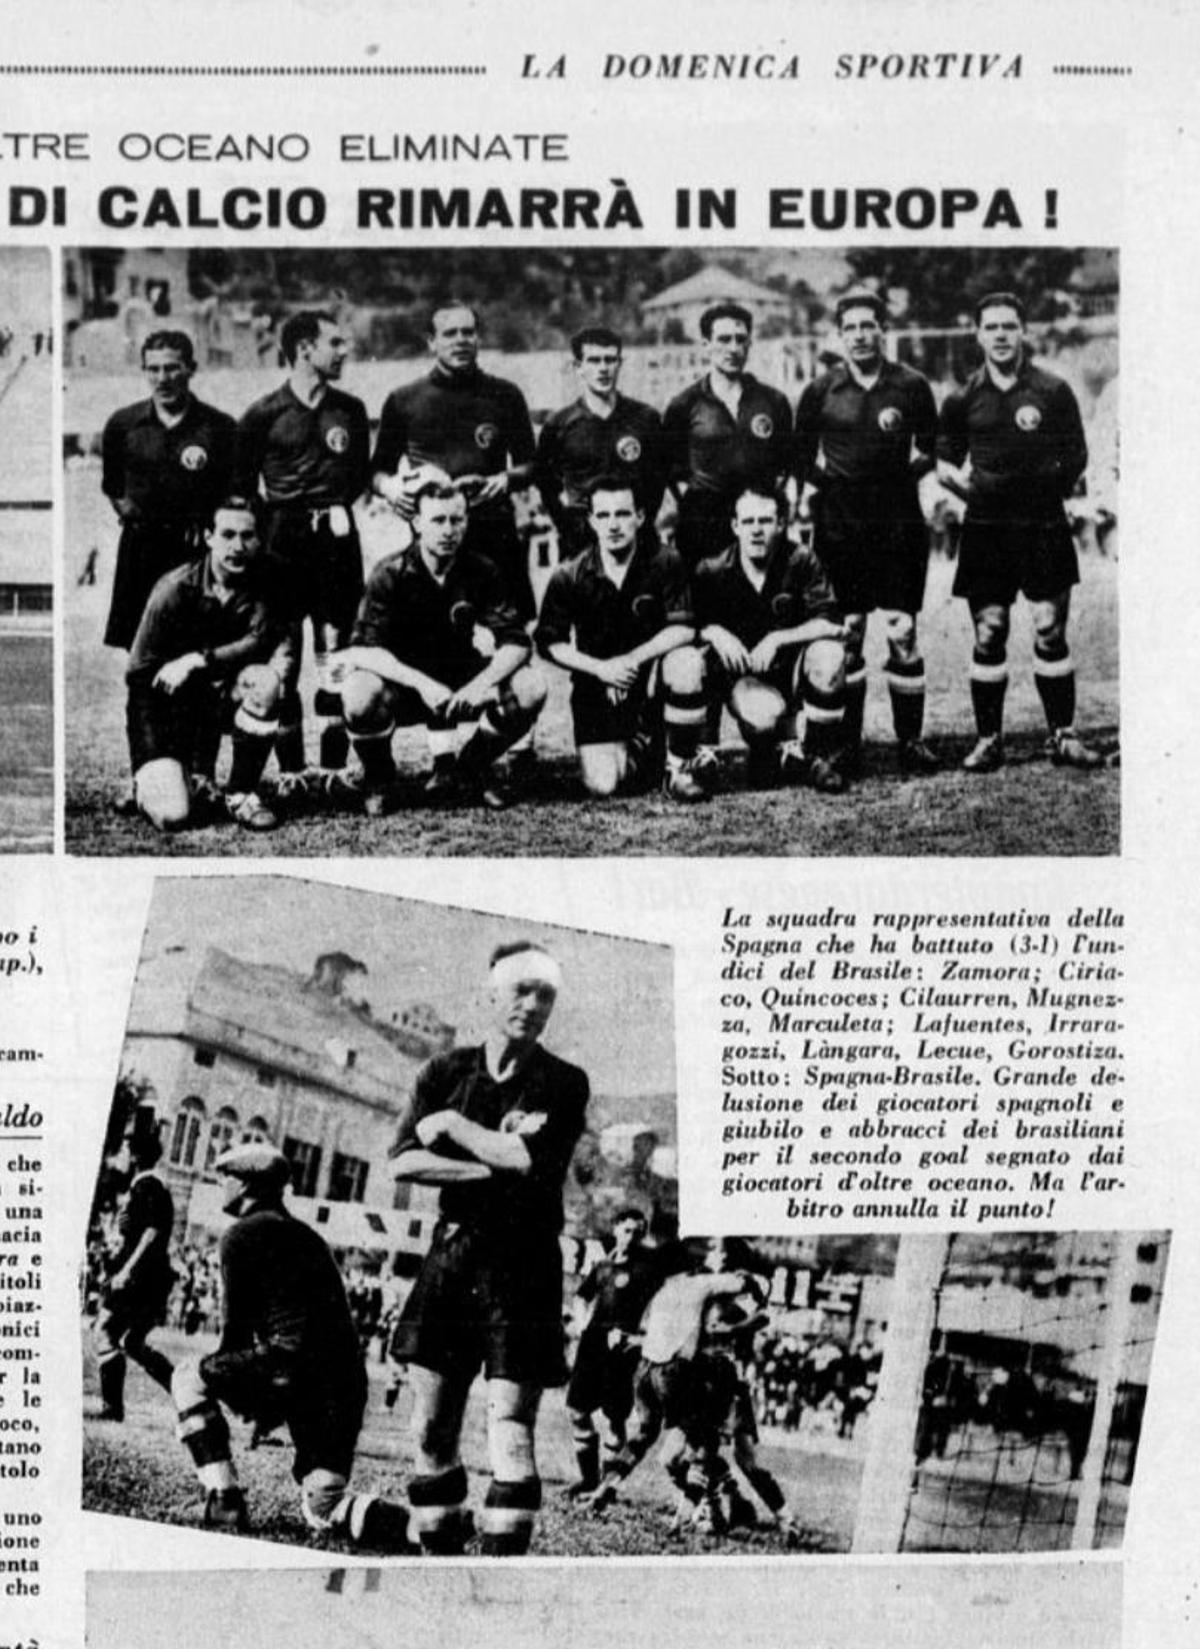 Imagen de la prensa italiana del Mundial de 1934